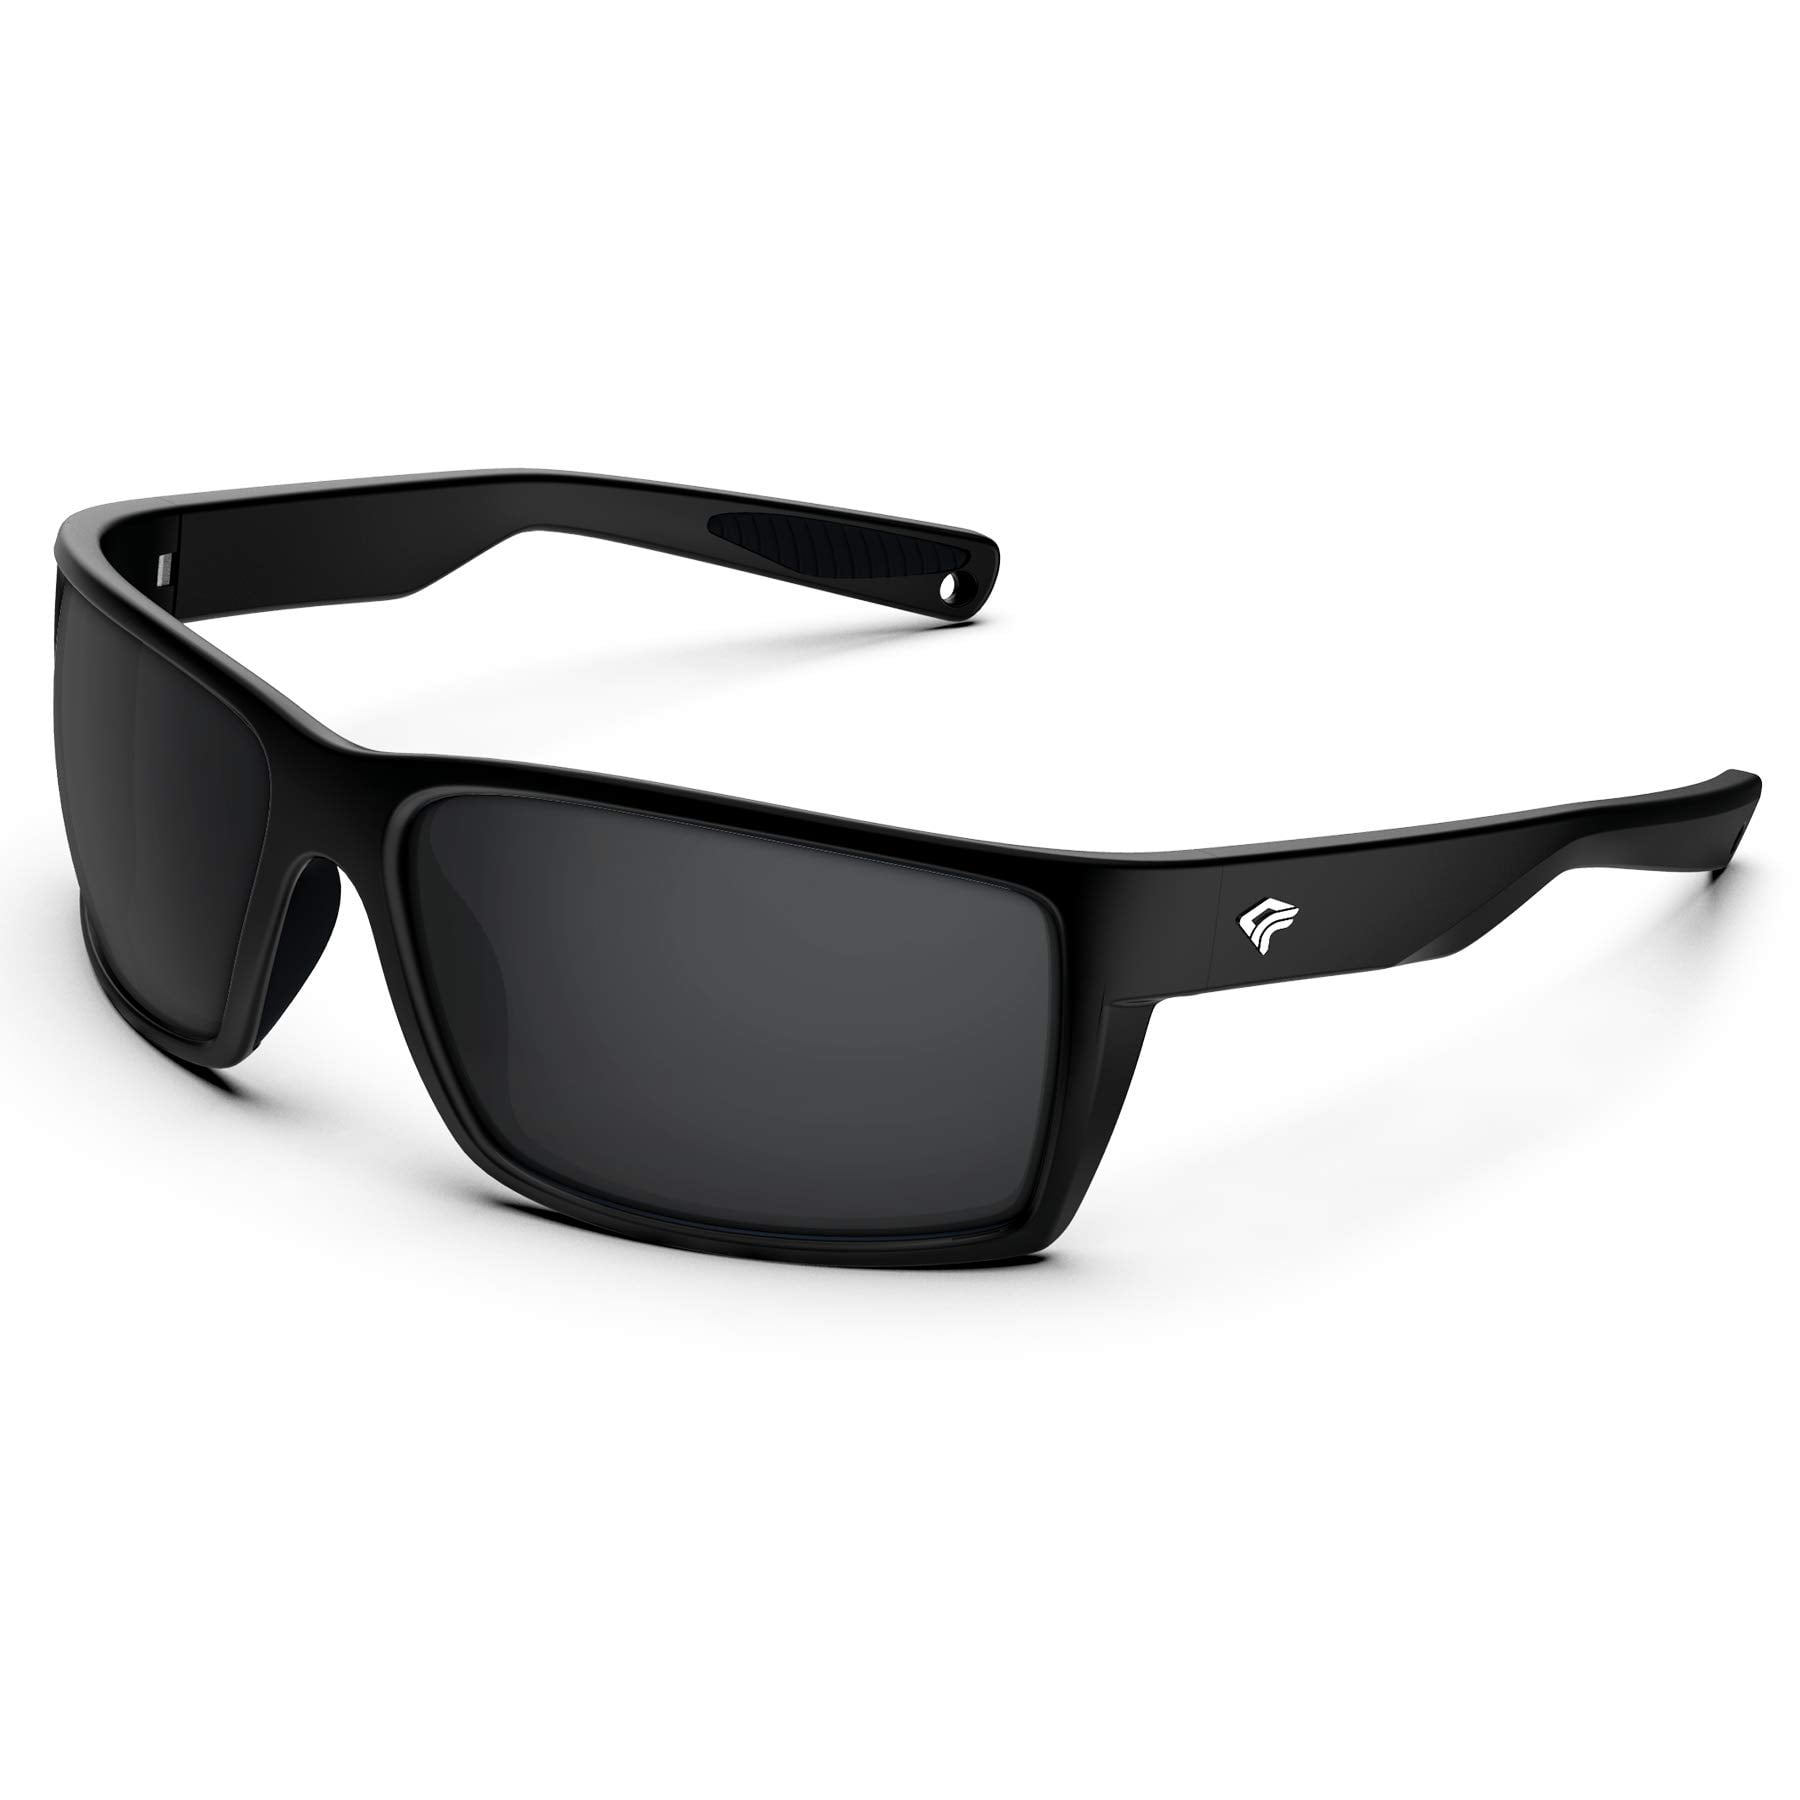 TOREGE Sports Polarized Sunglasses for Men Women Flexible Frame